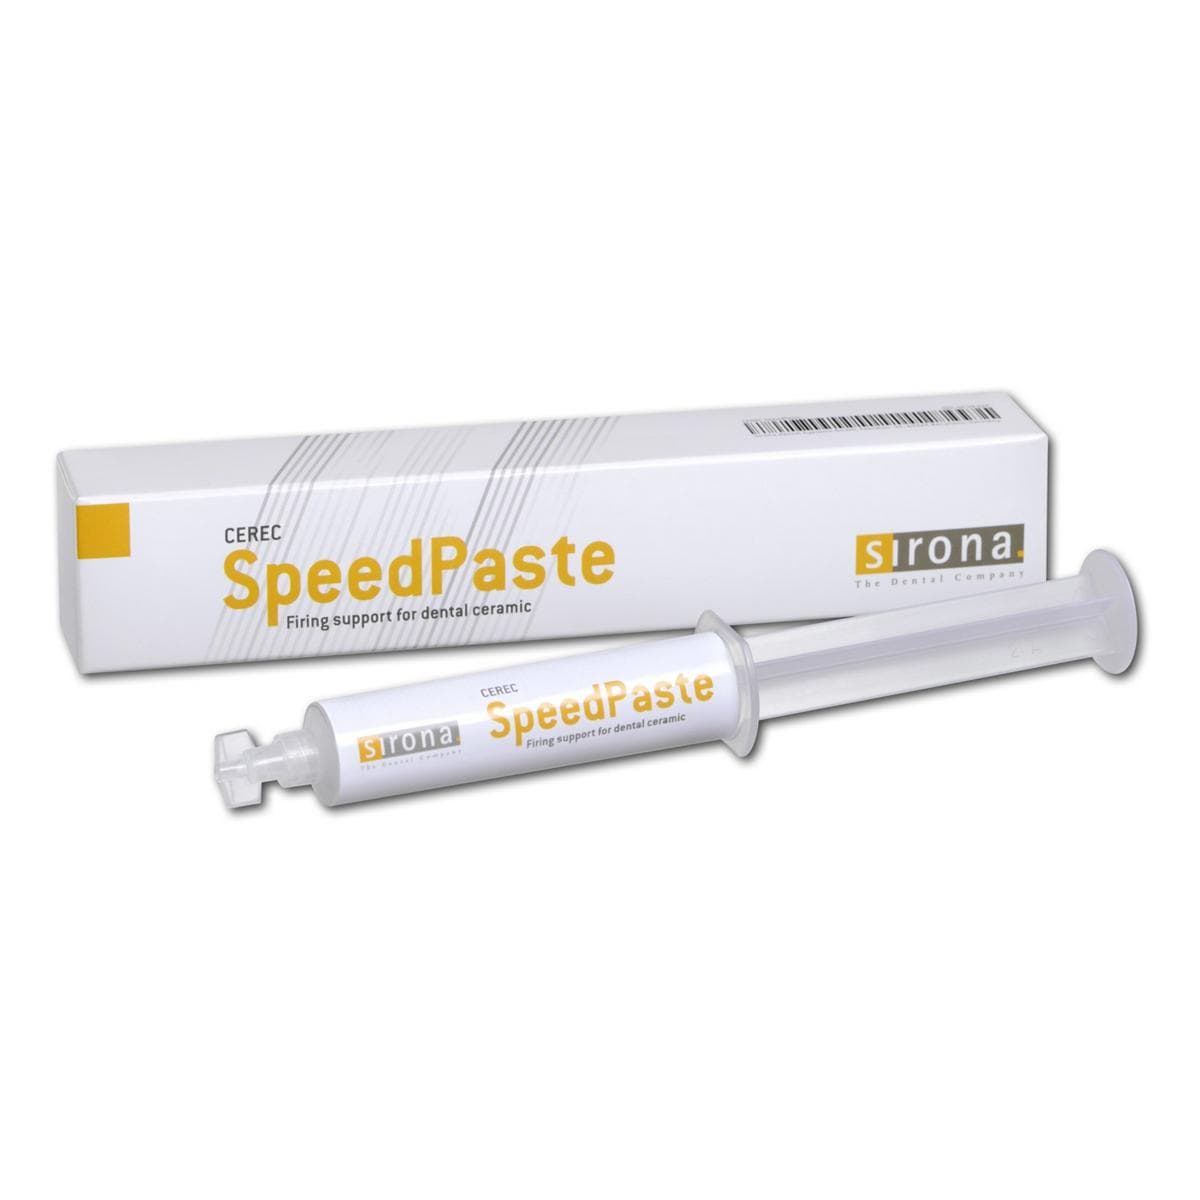 CEREC SpeedPaste - Spritze 12 ml